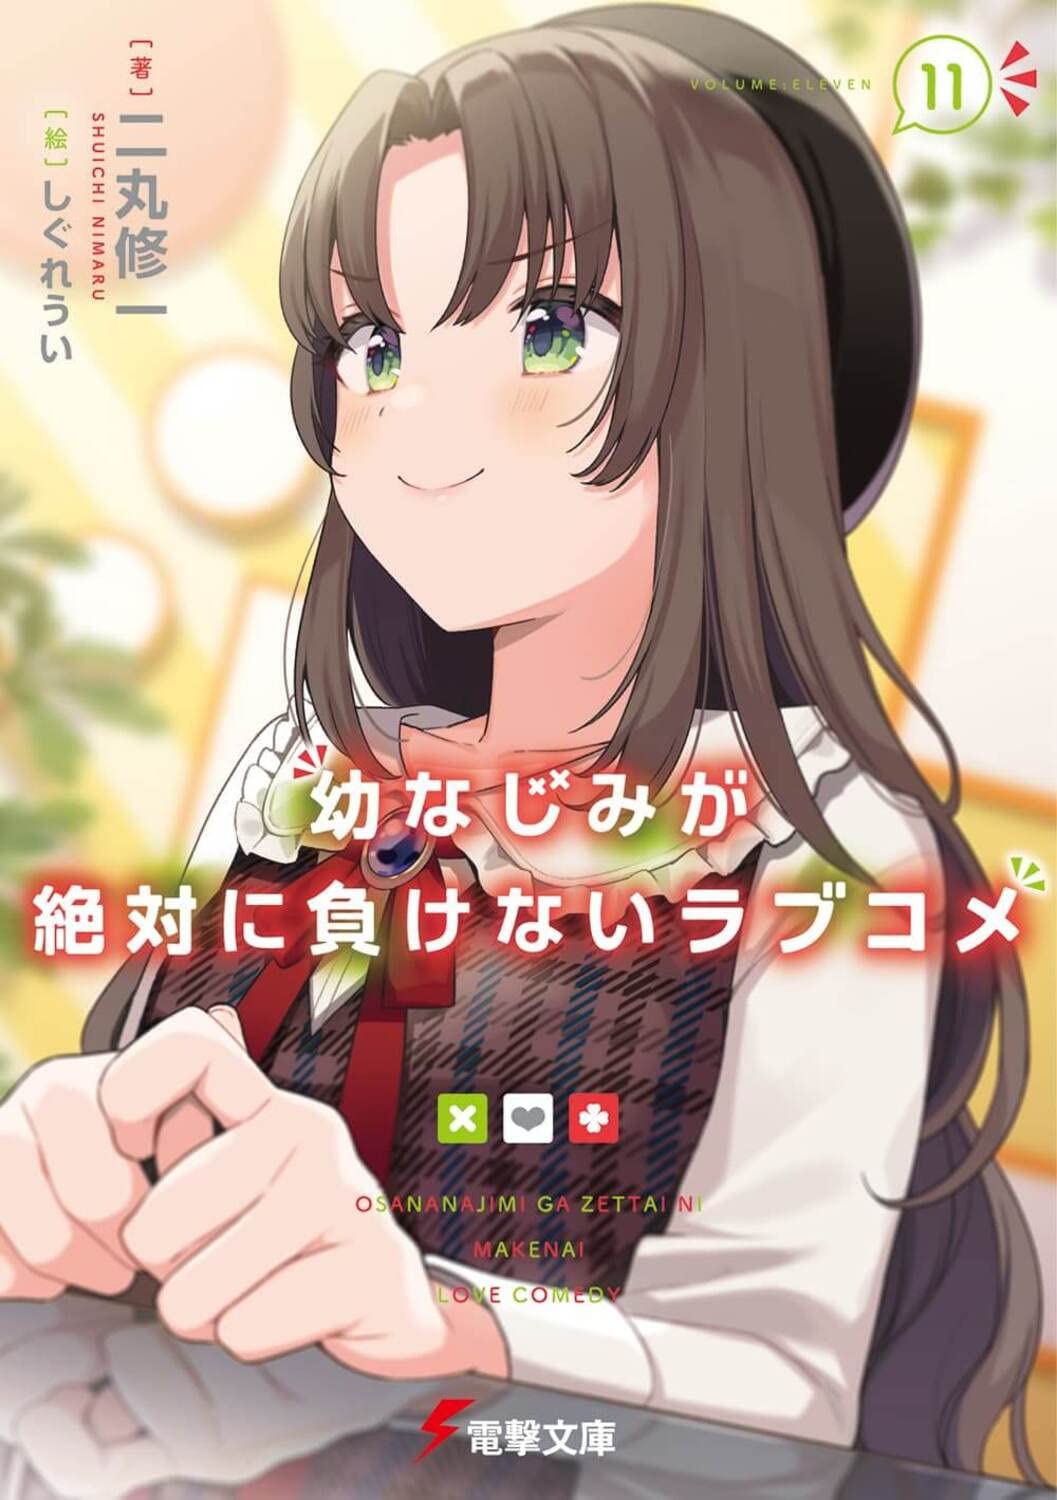 Osananajimi ga Zettai ni Makenai Love Come Anime Listed With April